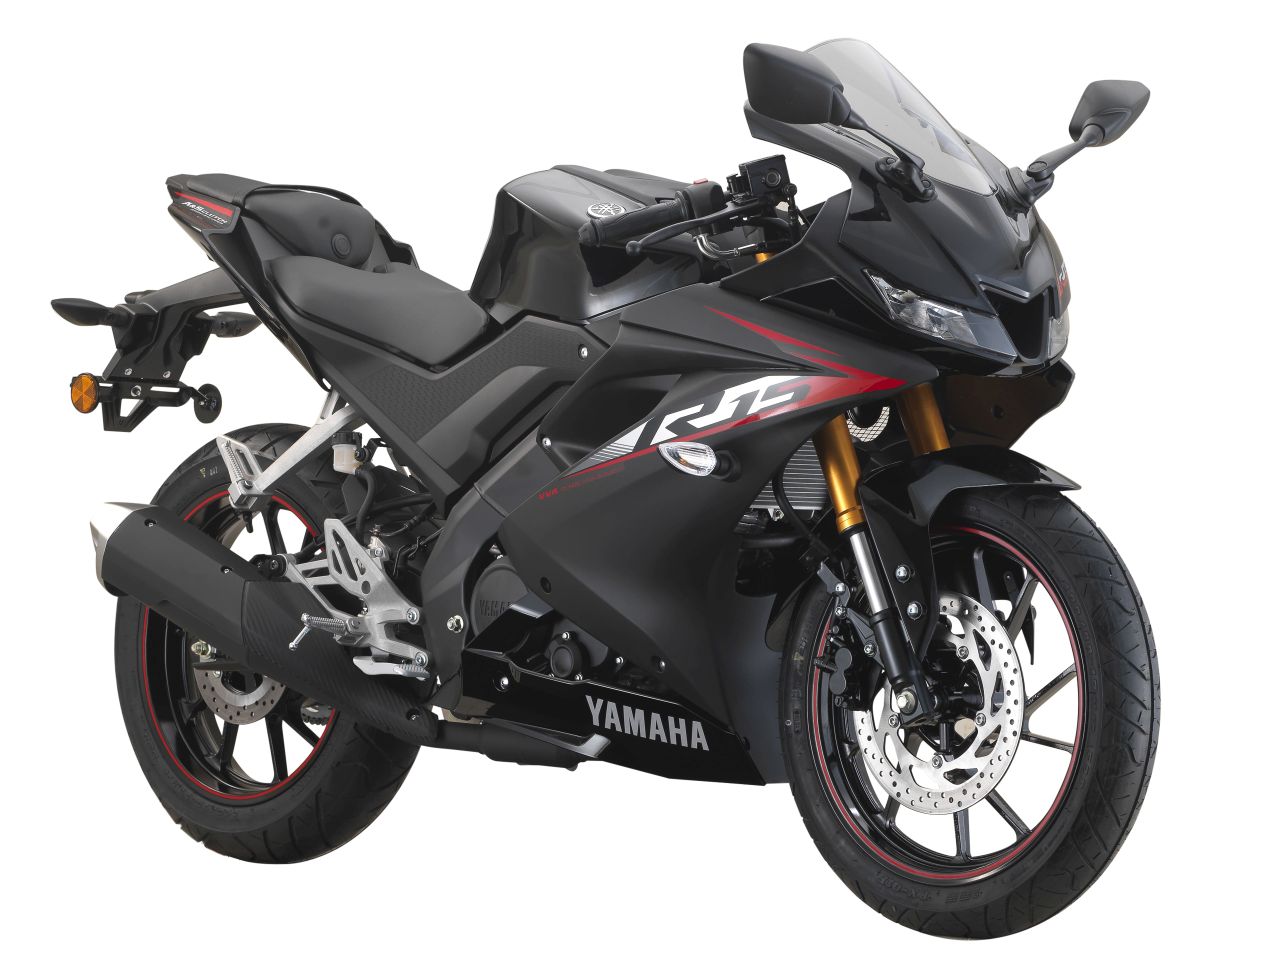 2019 Yamaha R15 V3 in Black